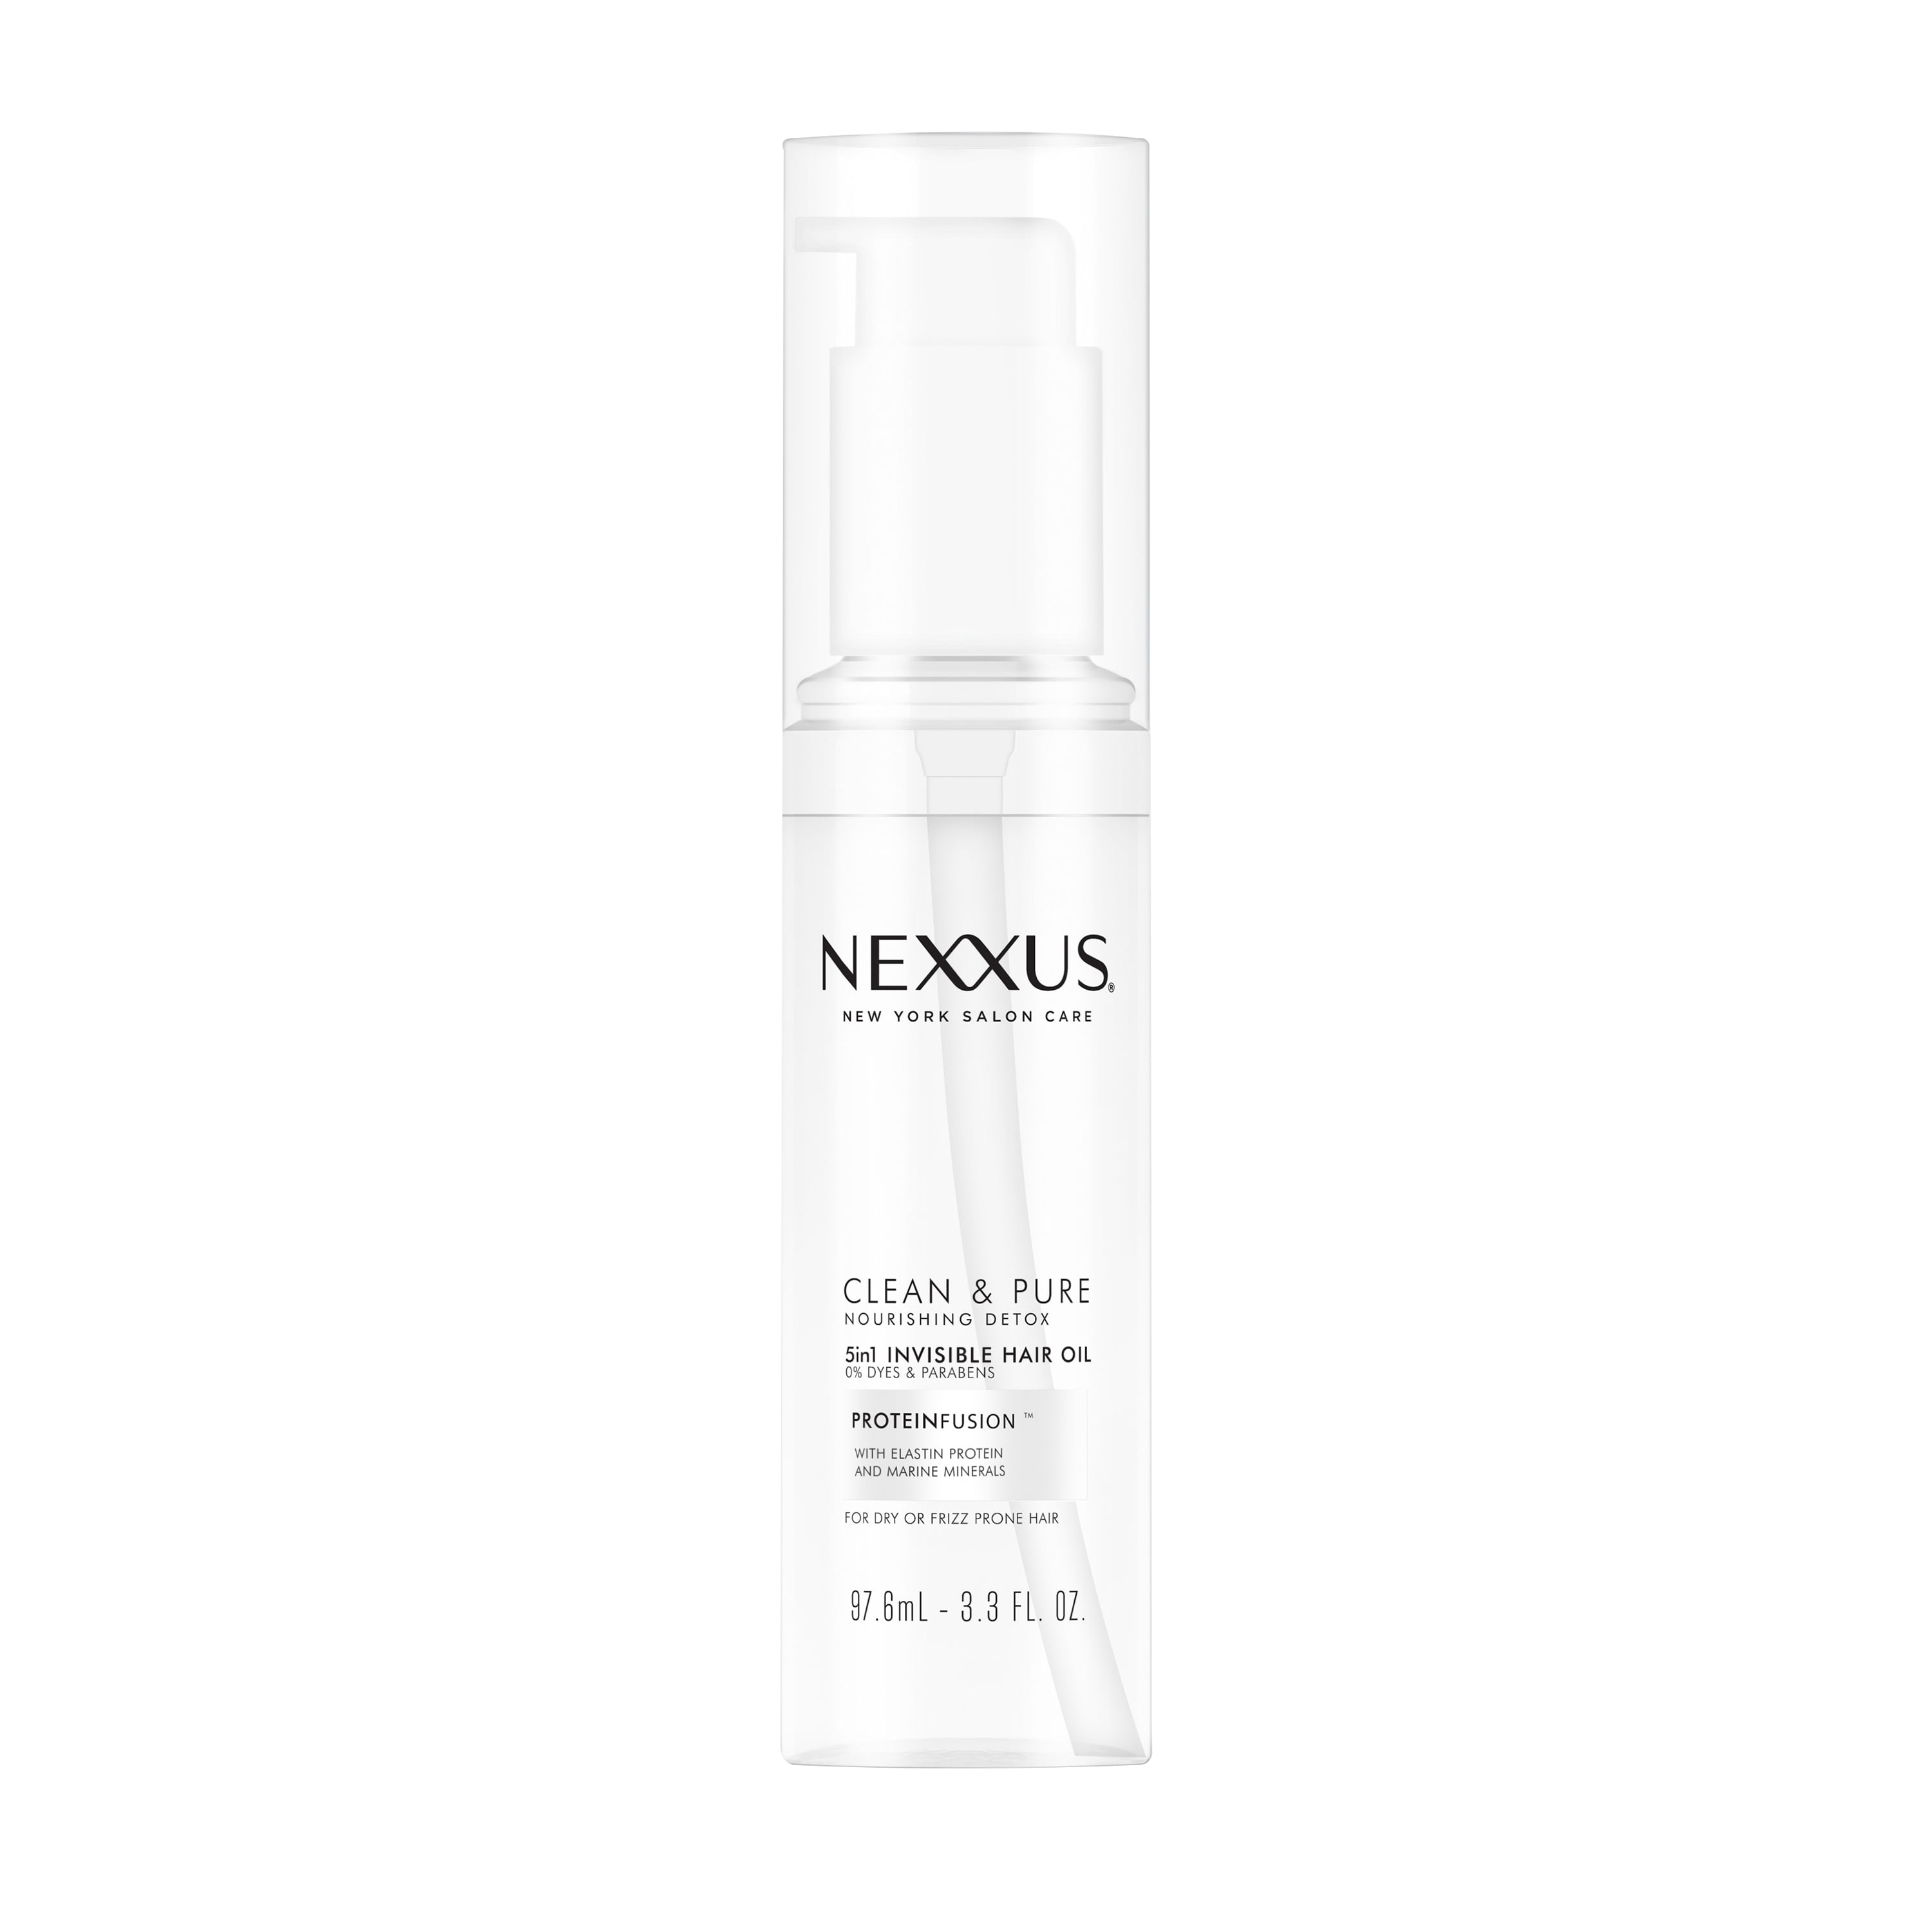 Nexxus Clean & Pure Nourishing Detox 5in1 Invisible Hair Oil  oz -  